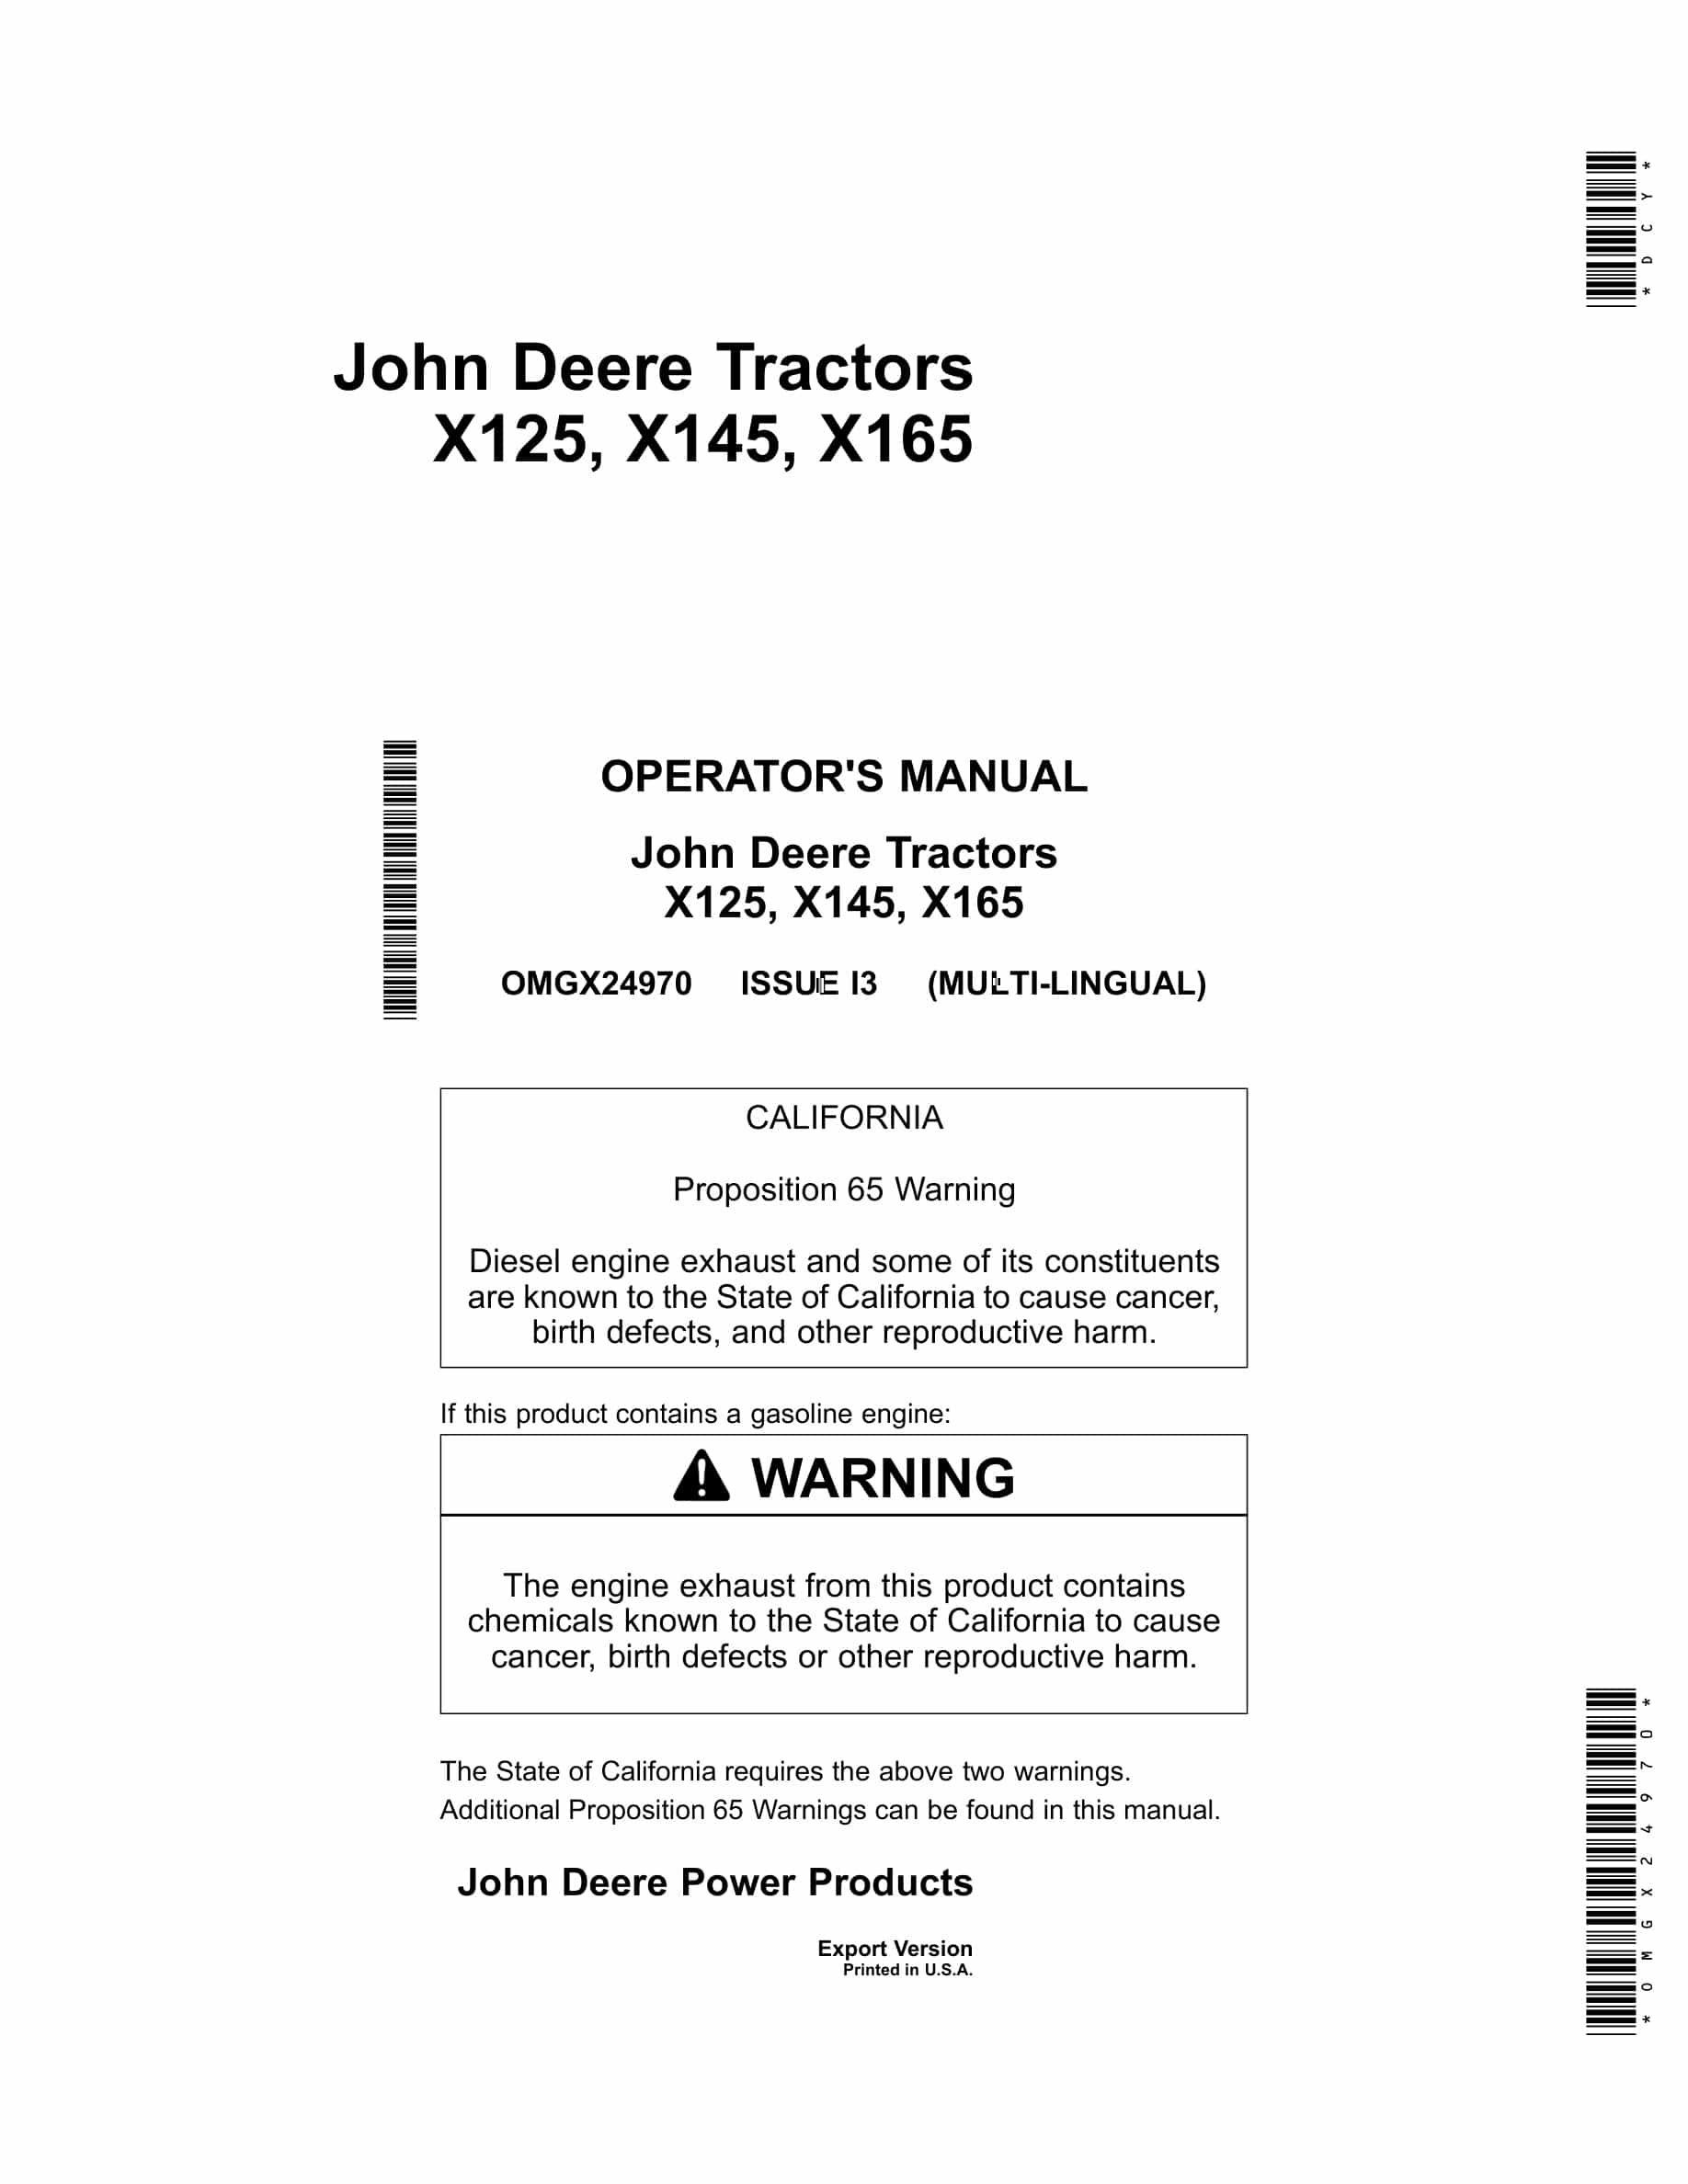 John Deere X125, X145, X165 Tractors Operator Manual OMGX24970-1